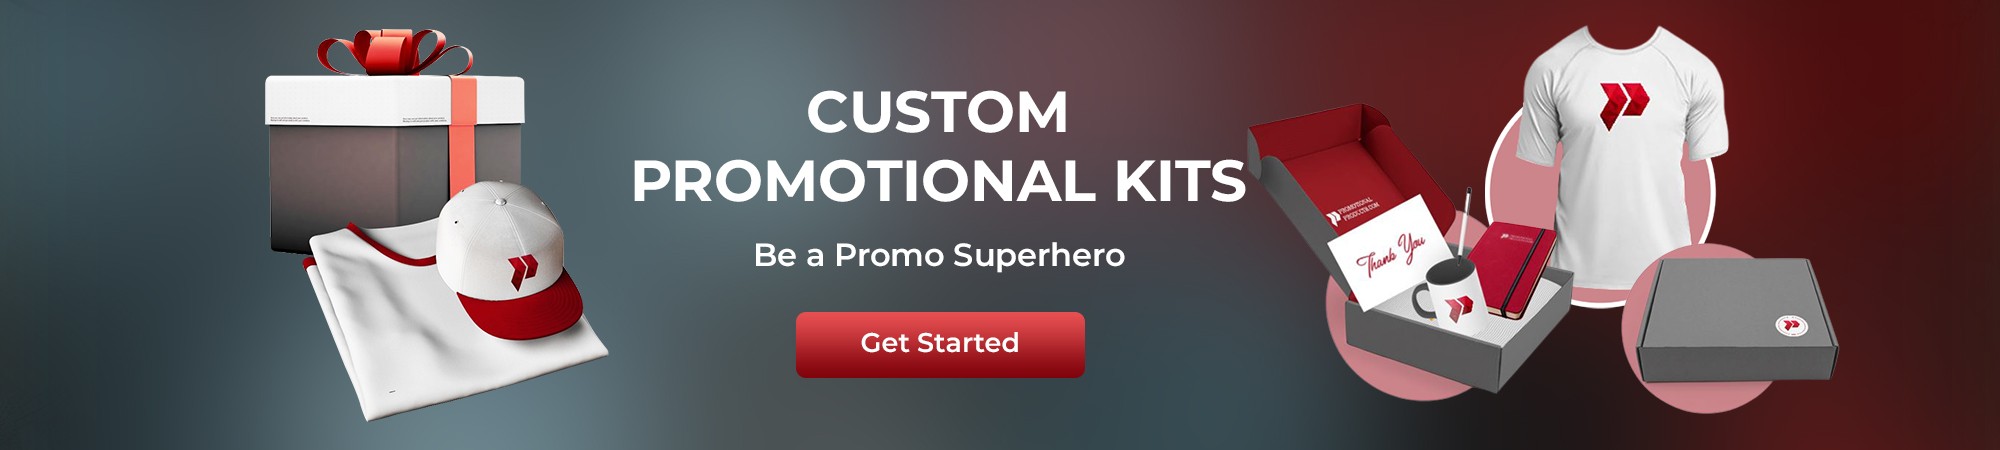 Custom Promotional Kits Banner